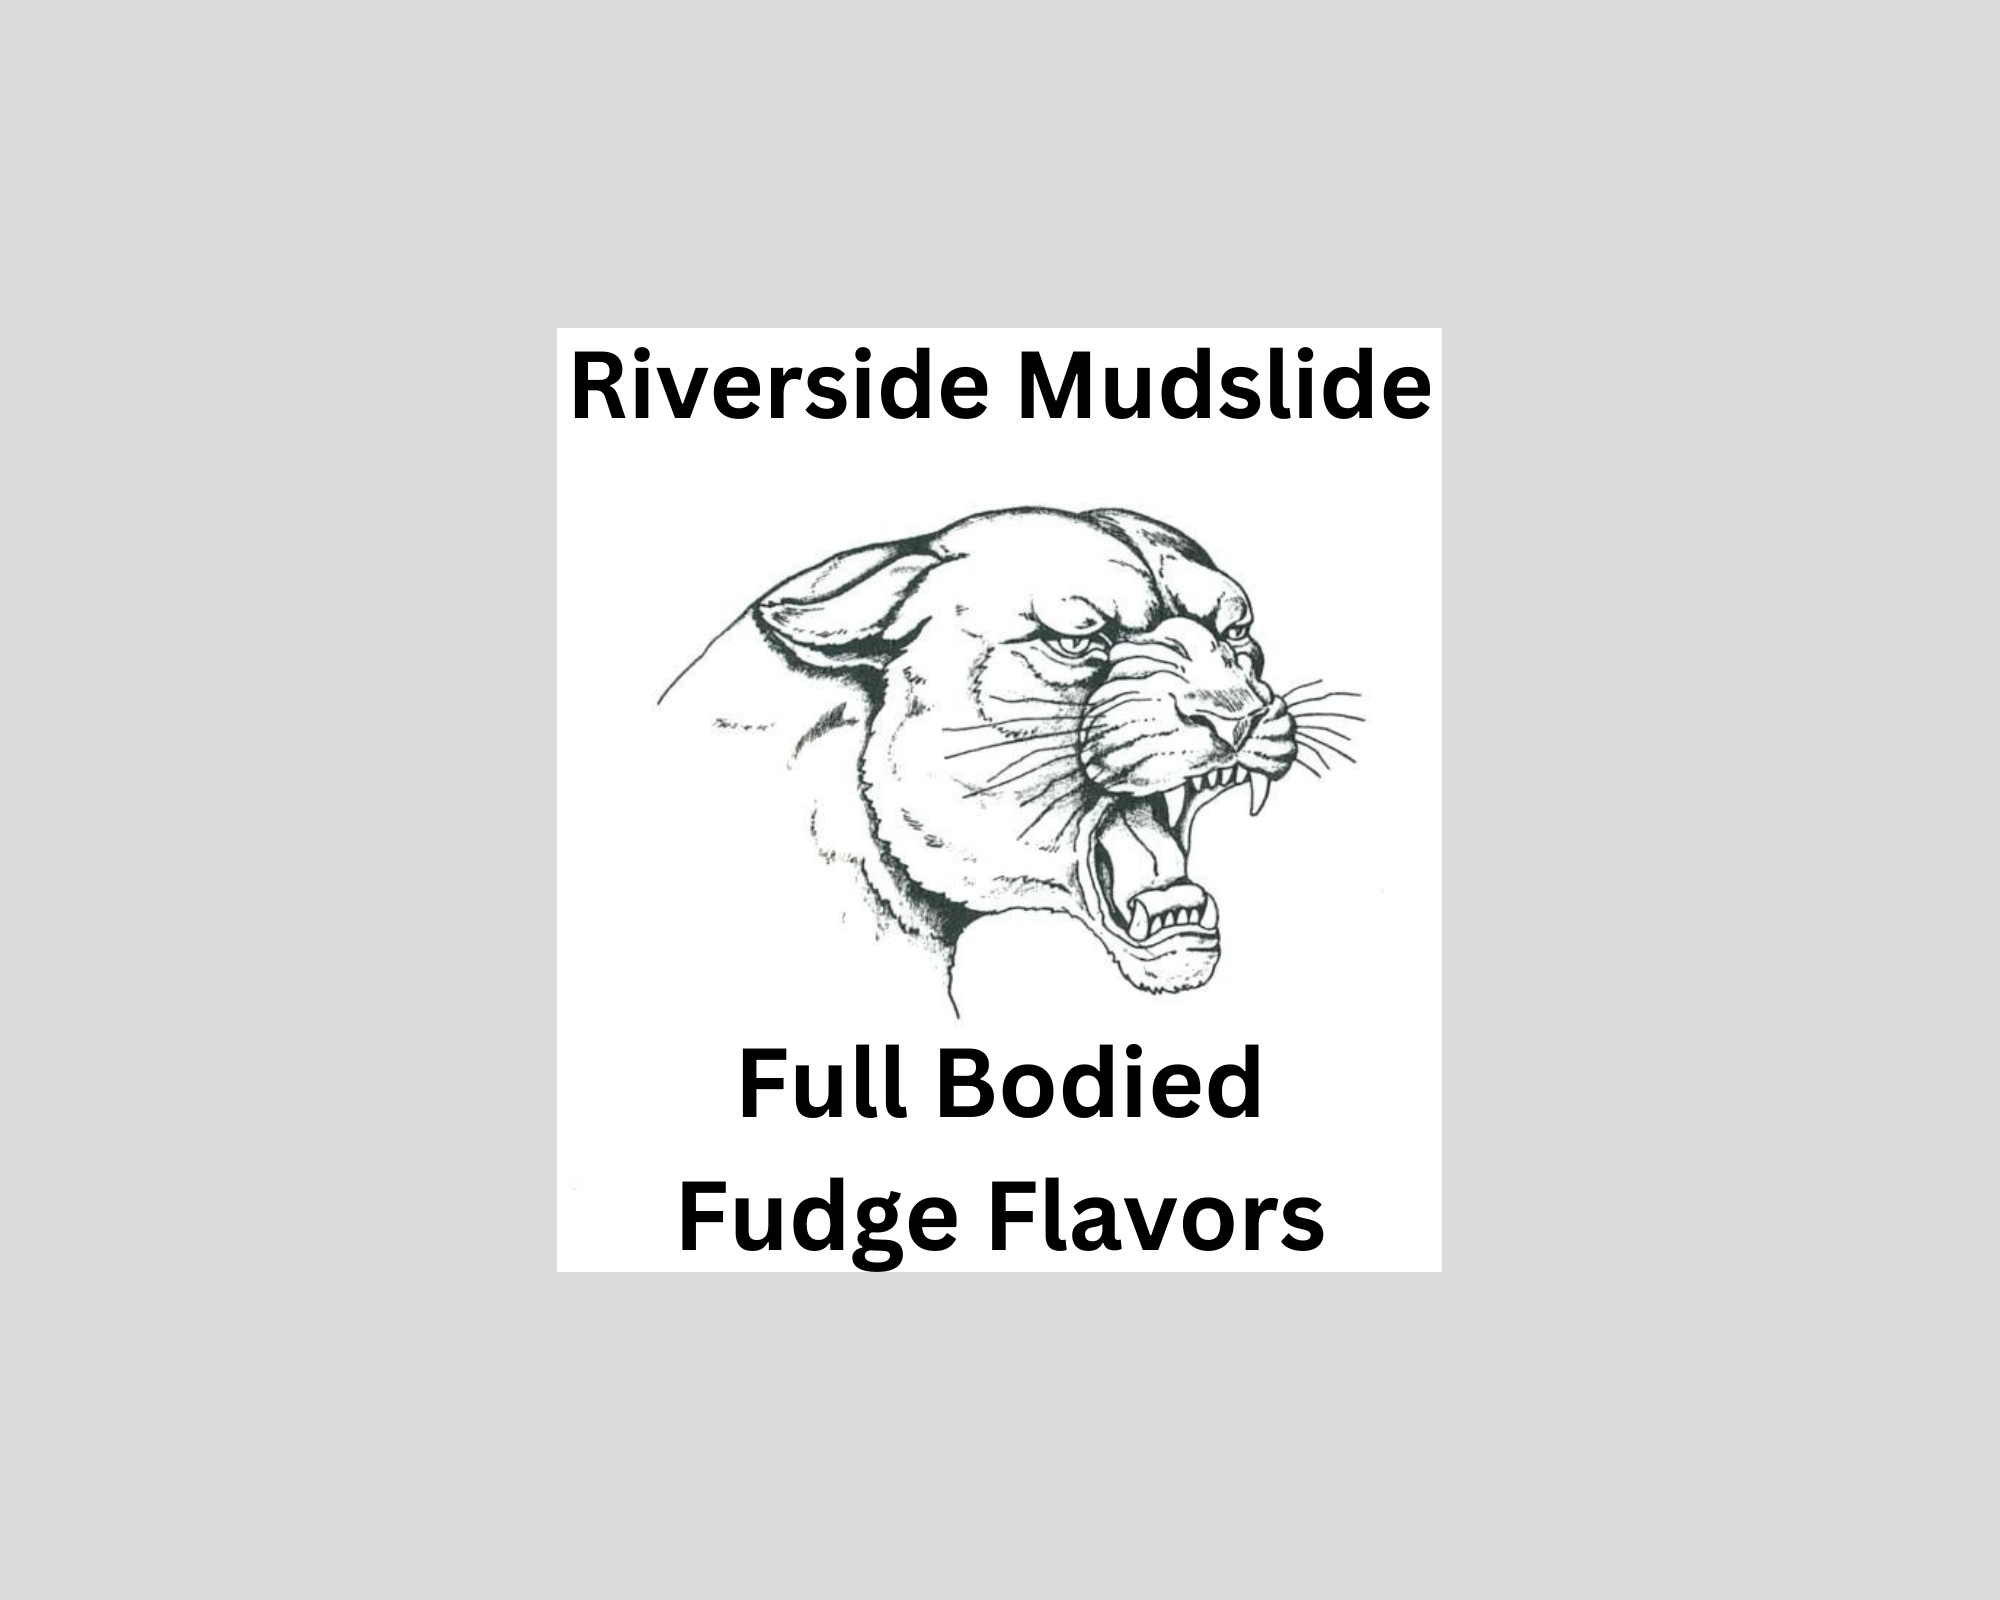 Riverside Mudslide